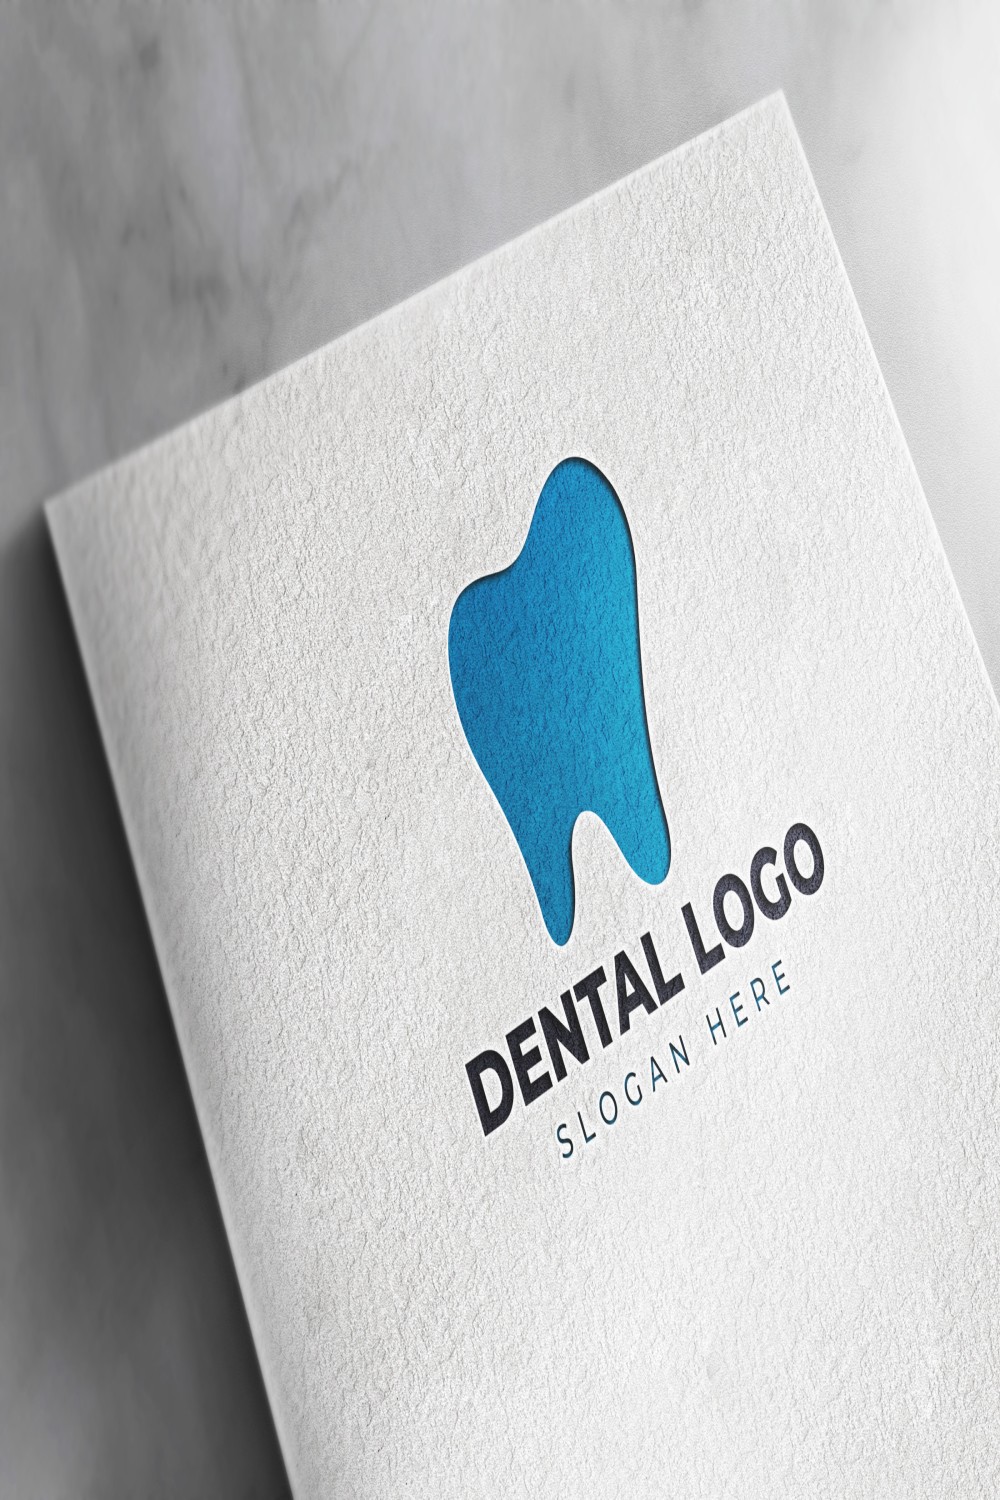 Dental Logo Vector Design Template Pinterest image.